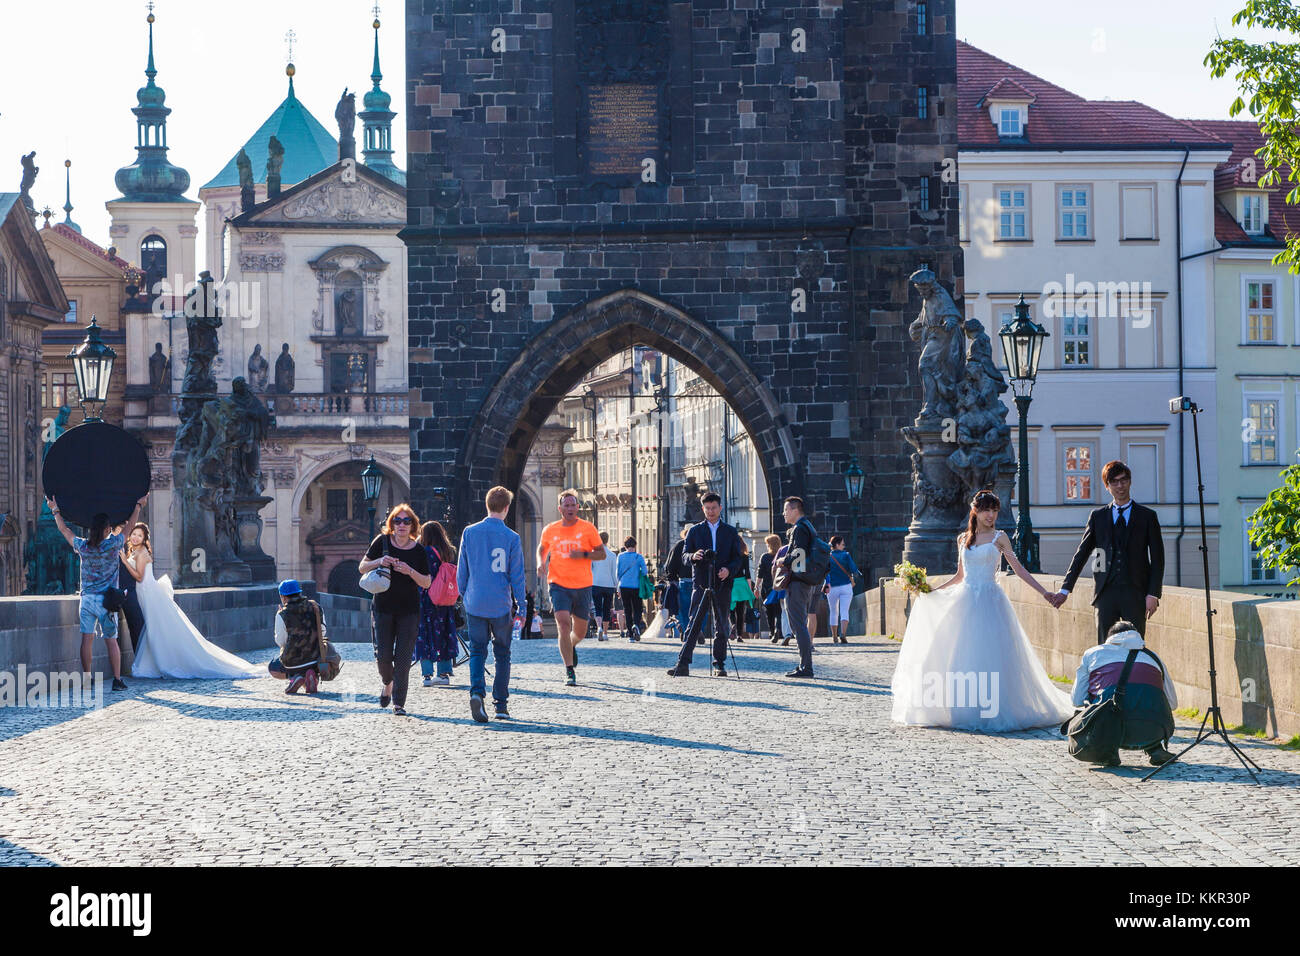 Czechia, Prague, old town, Charles Bridge, Asian wedding couples, wedding tourism, marrying, wedding dress Stock Photo